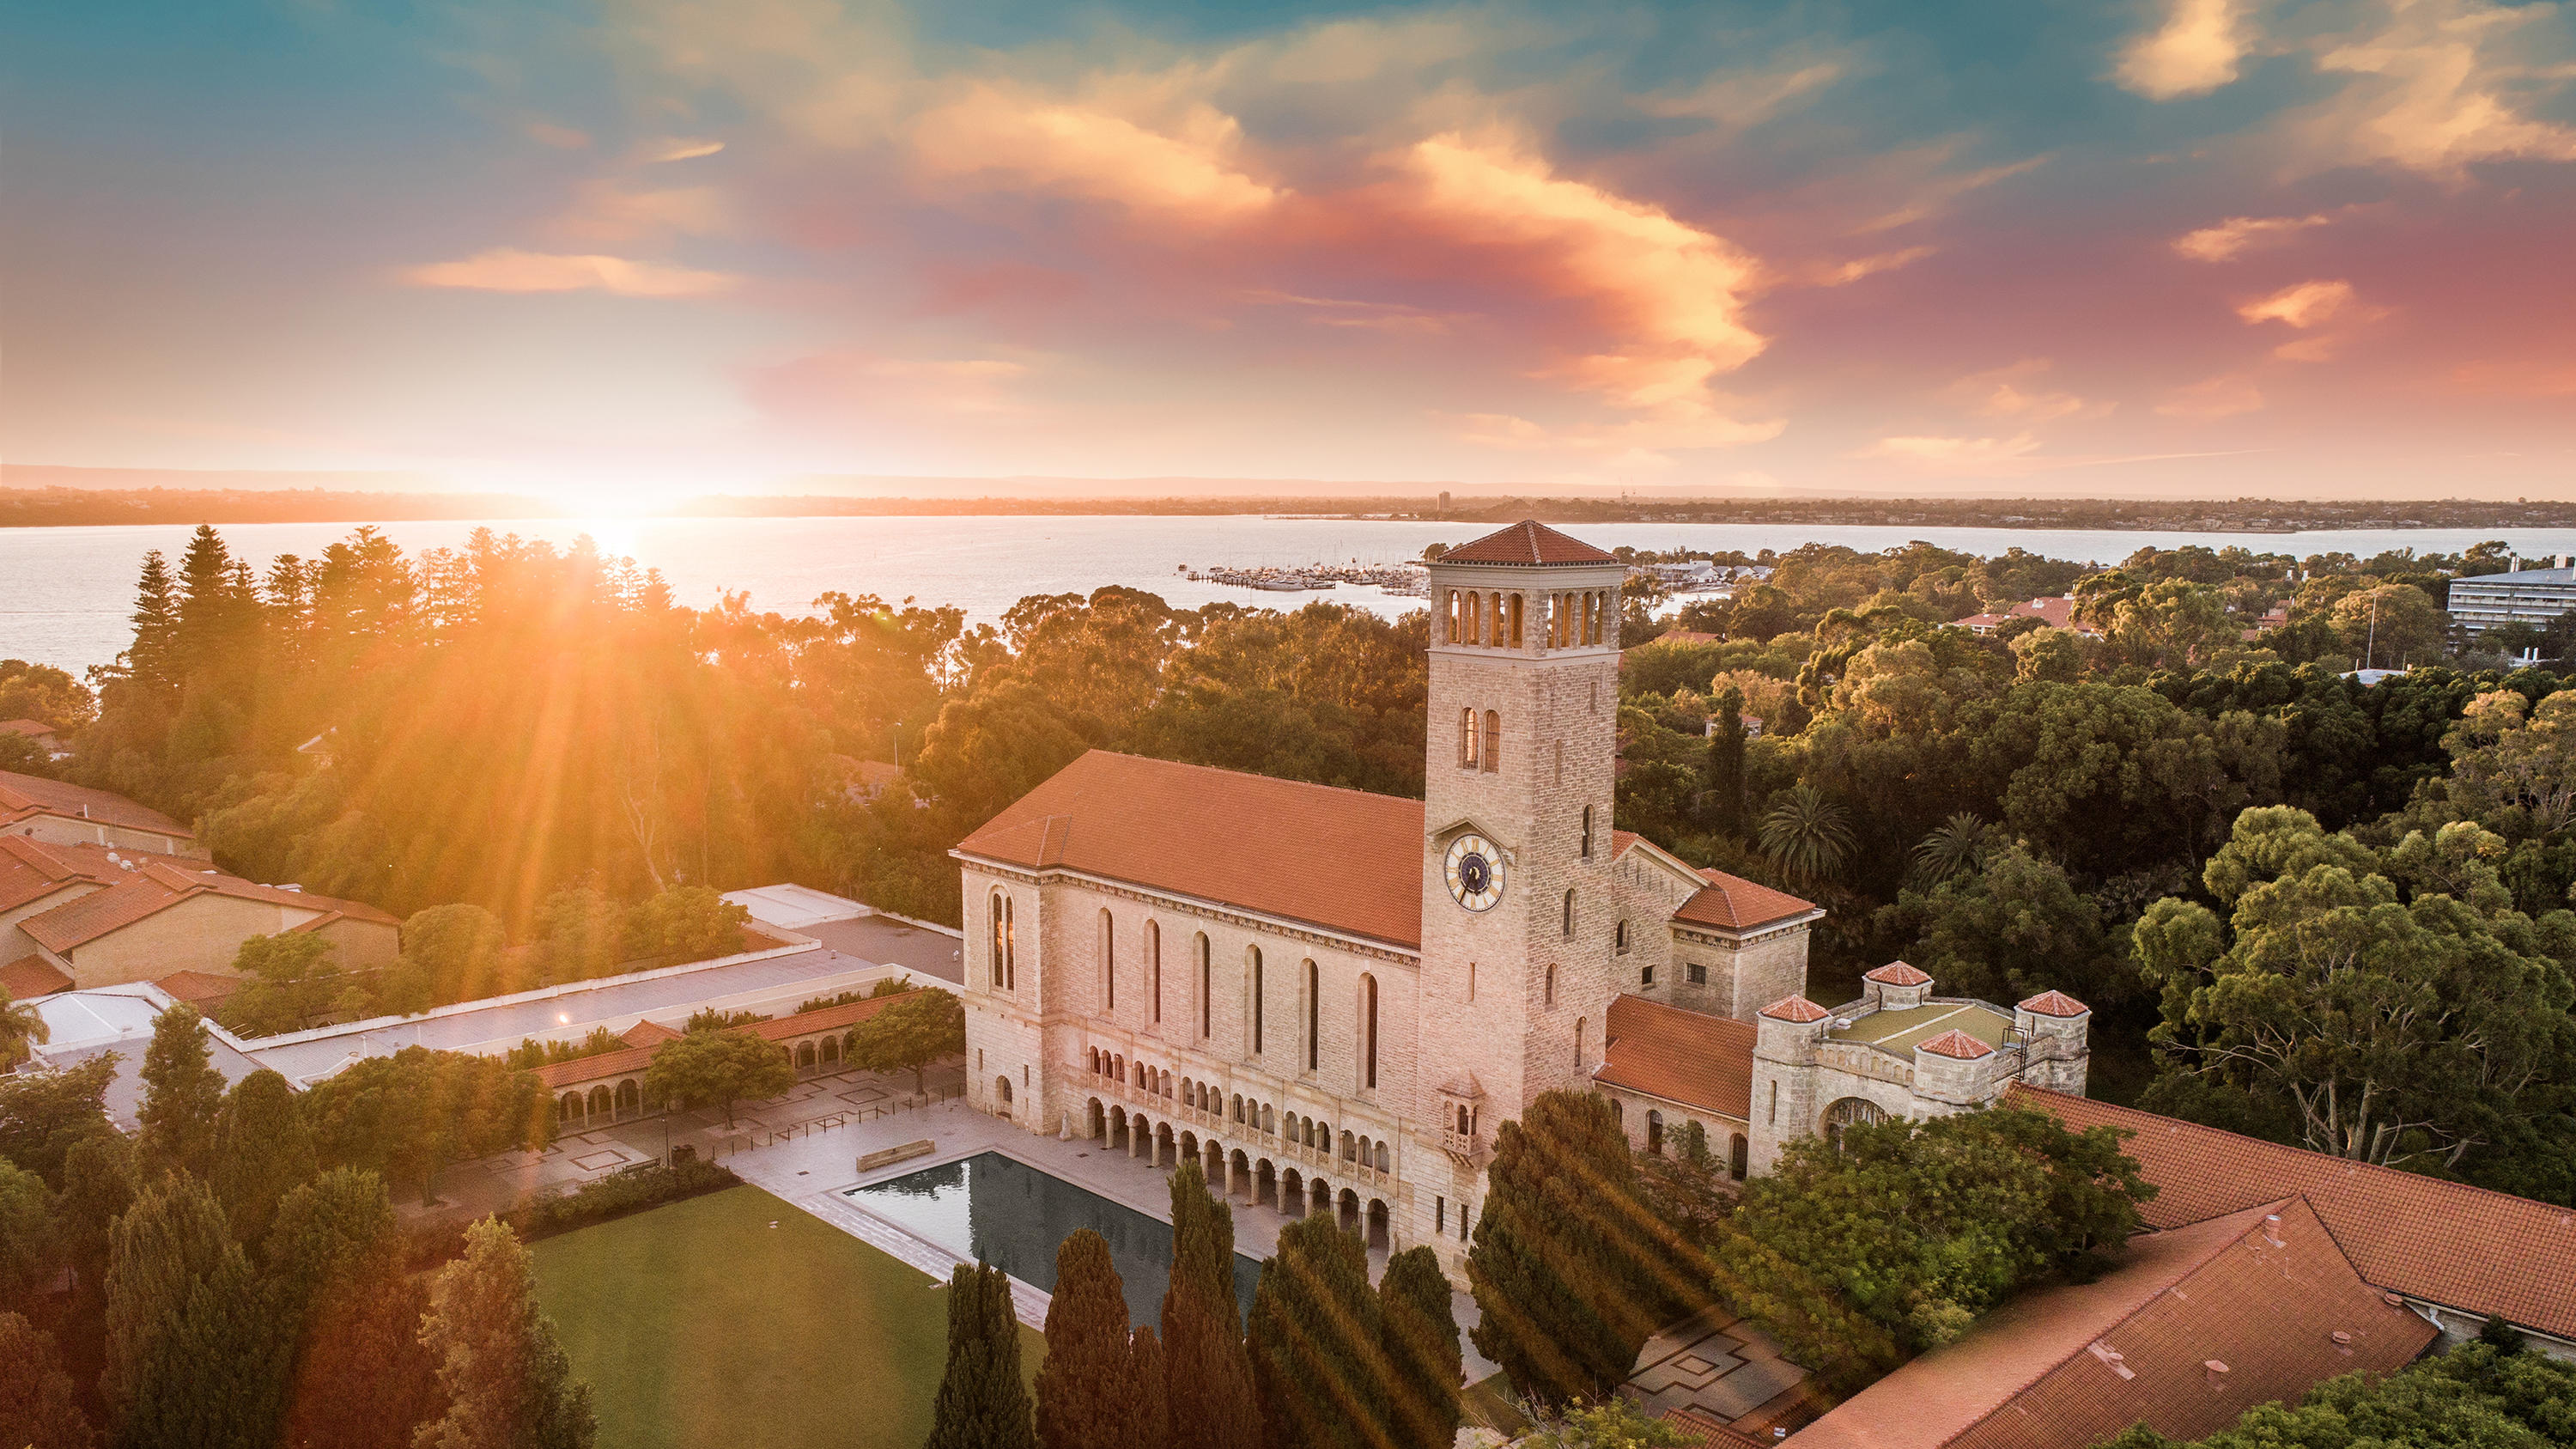 Images The University of Western Australia